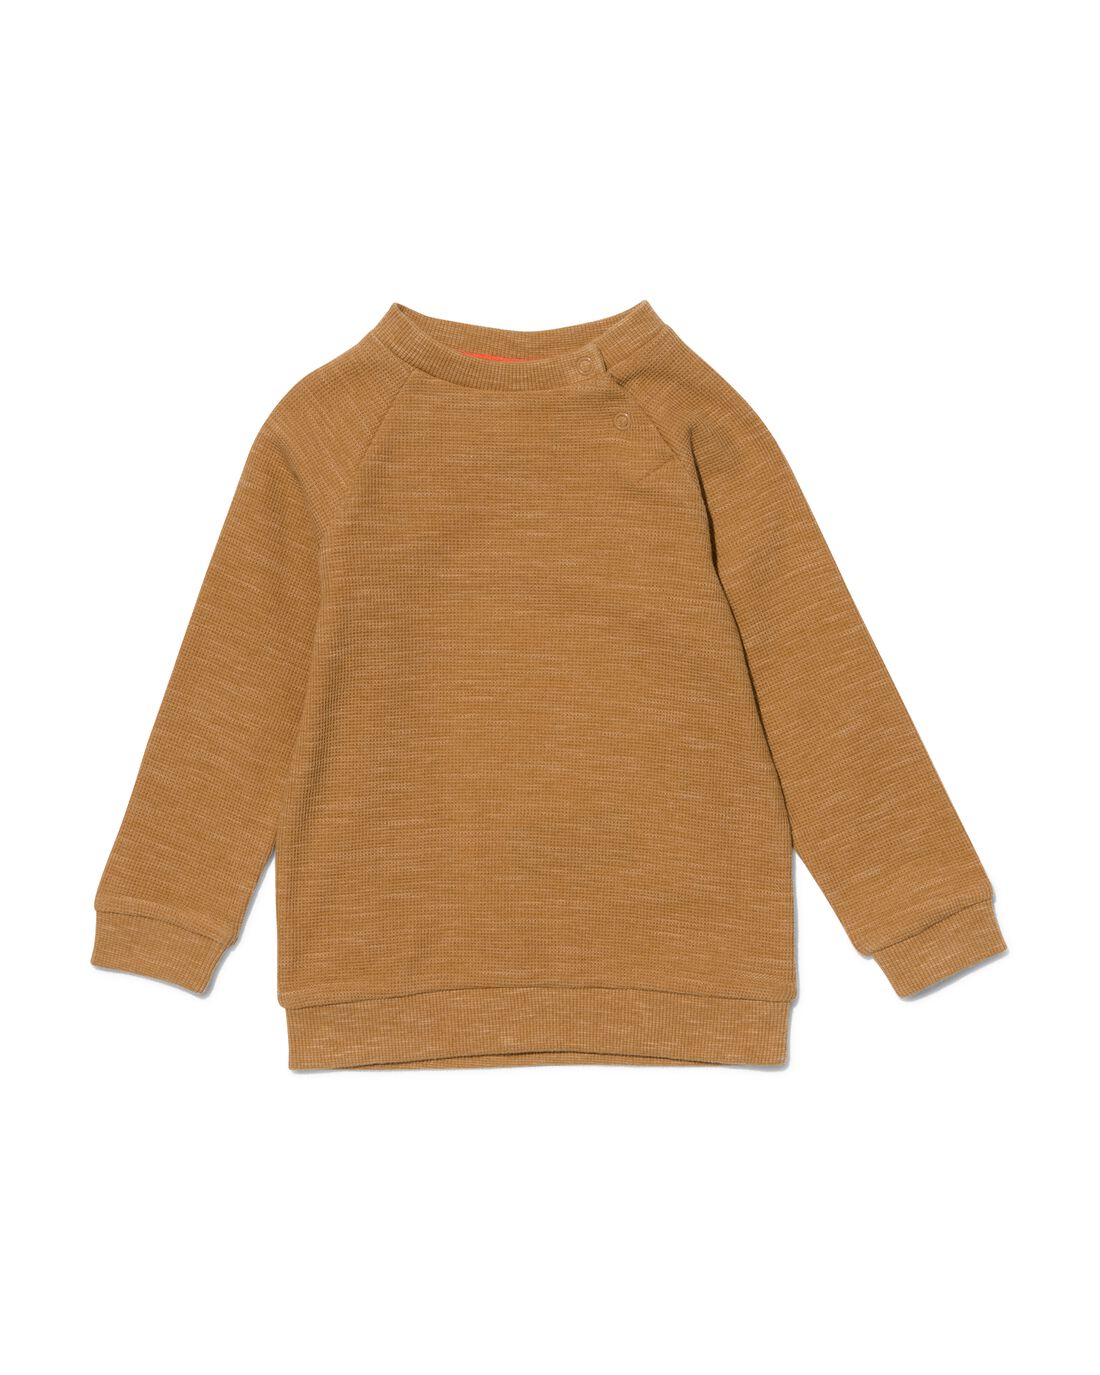 HEMA Baby Sweater Wafel Bruin (bruin)